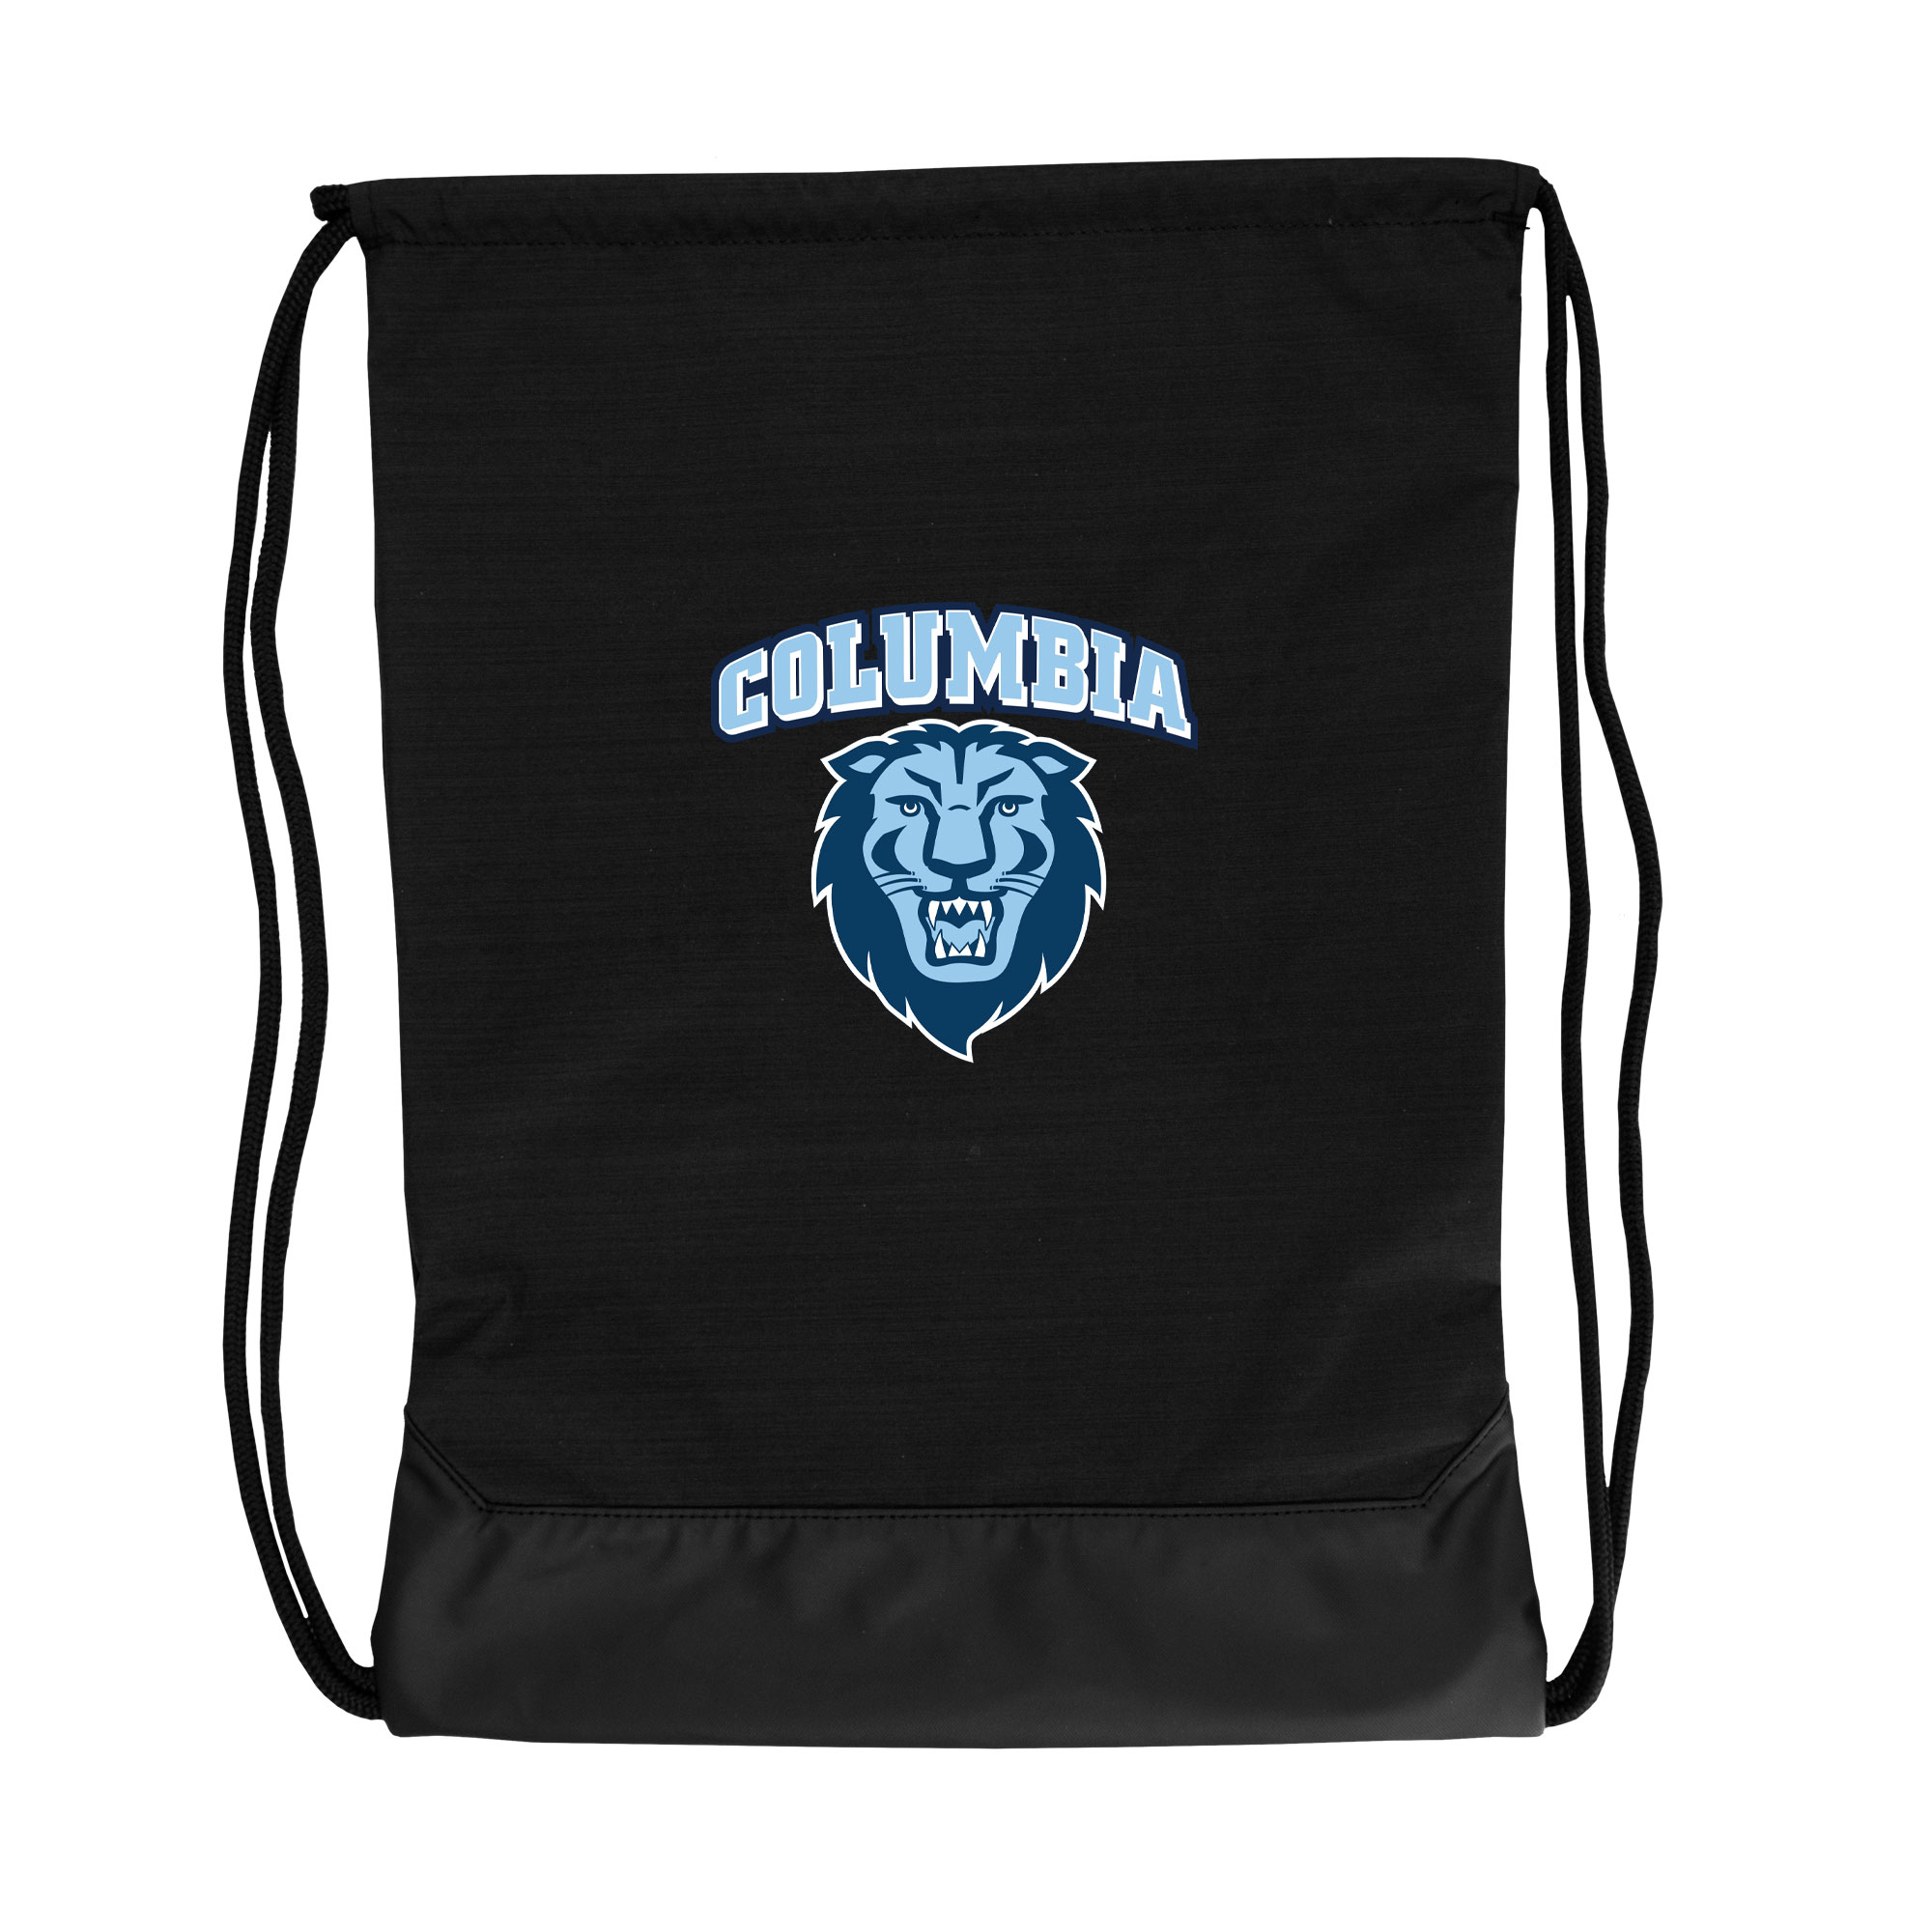 Columbia University Brasilia Gymsack Backpacks and Bags